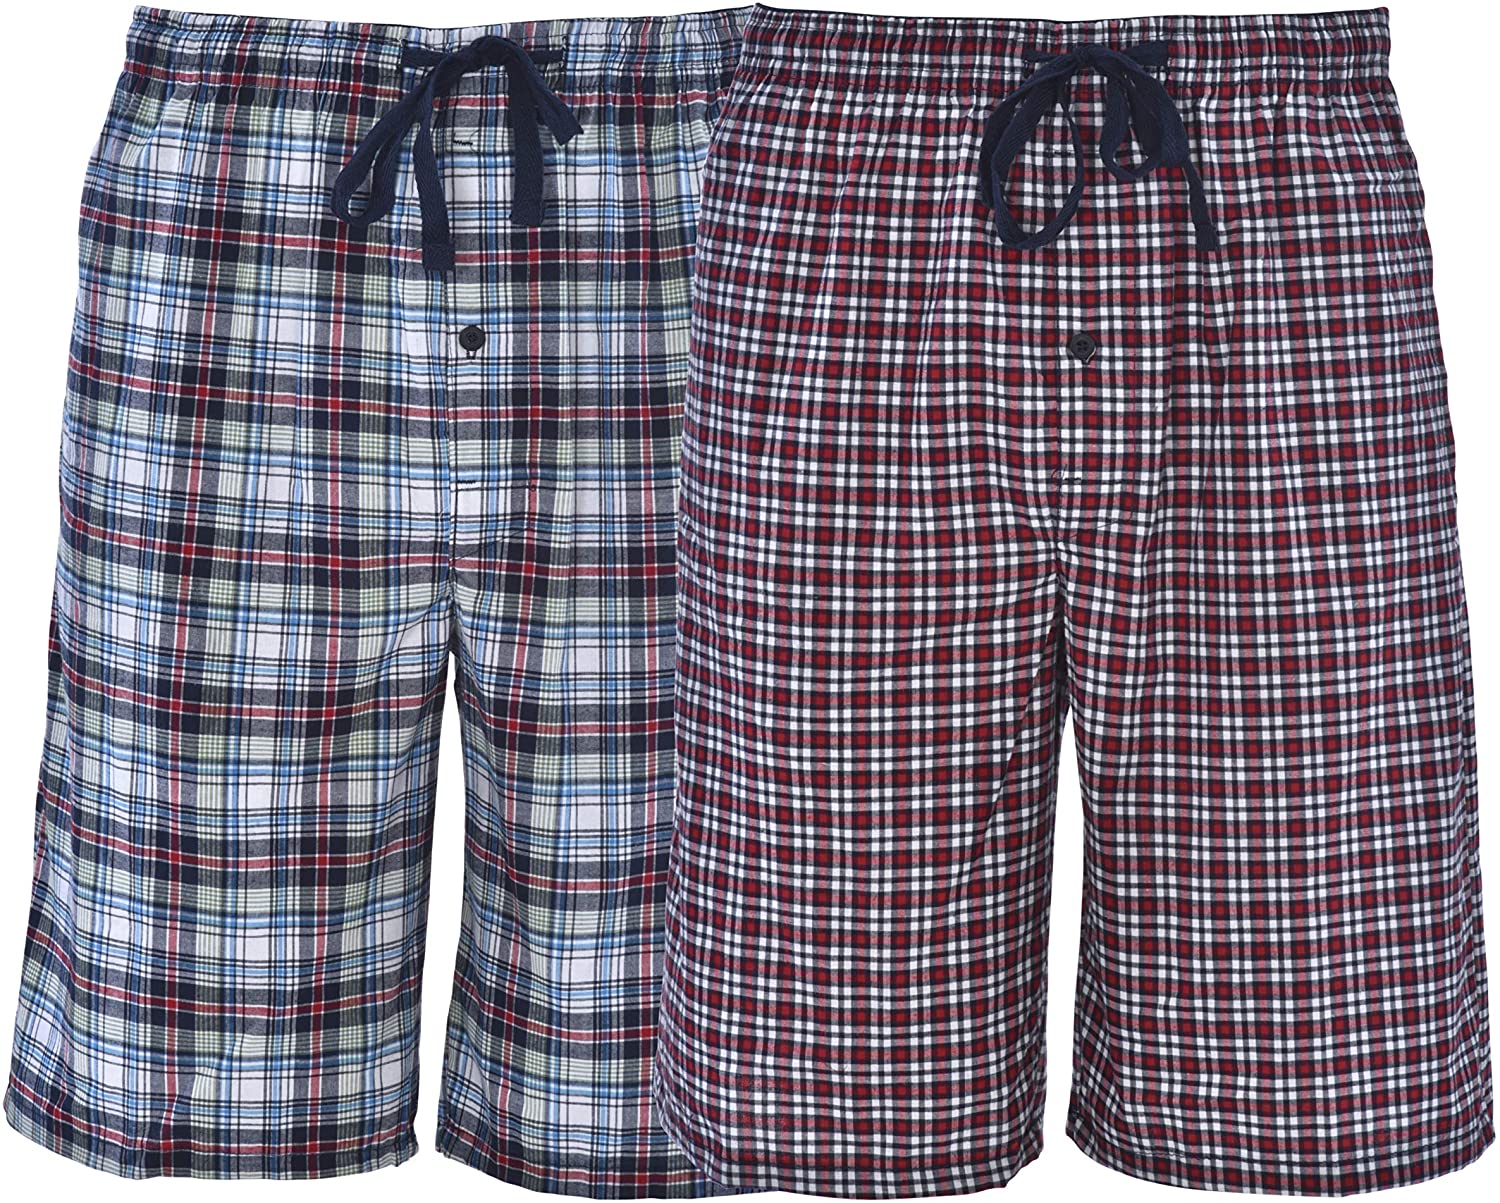 Hanes Men's Woven Plaid Shorts 2-Pack 